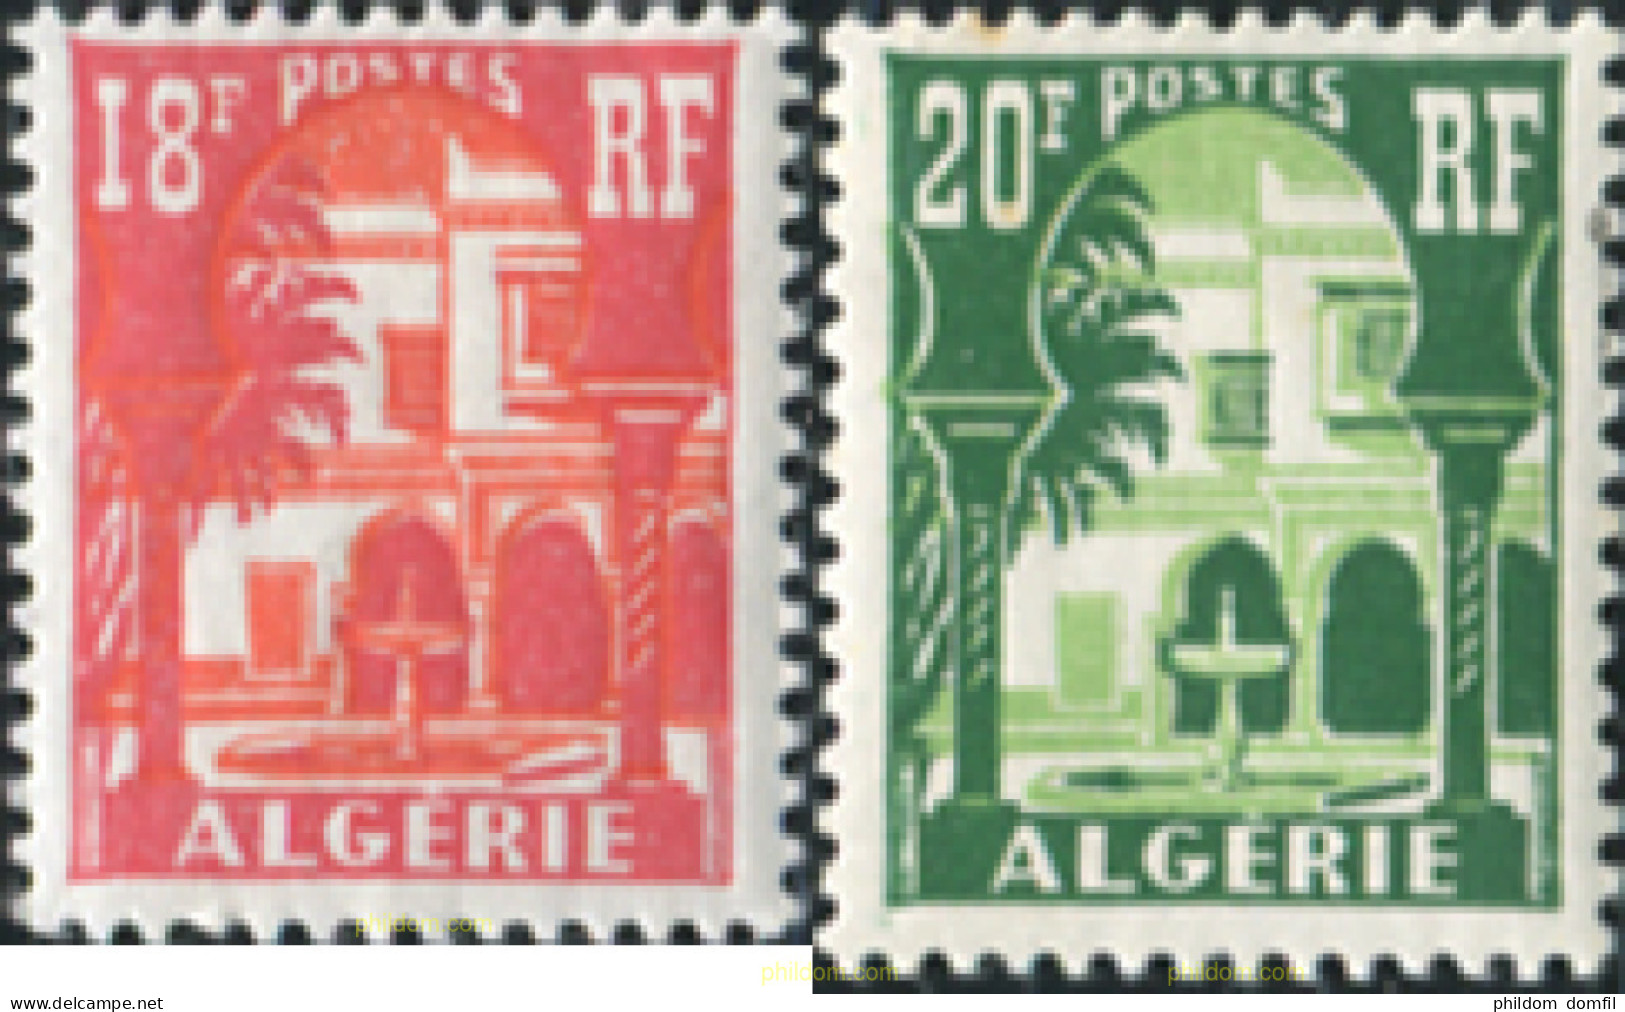 724293 HINGED ARGELIA 1956 MUSEO - Algerien (1962-...)